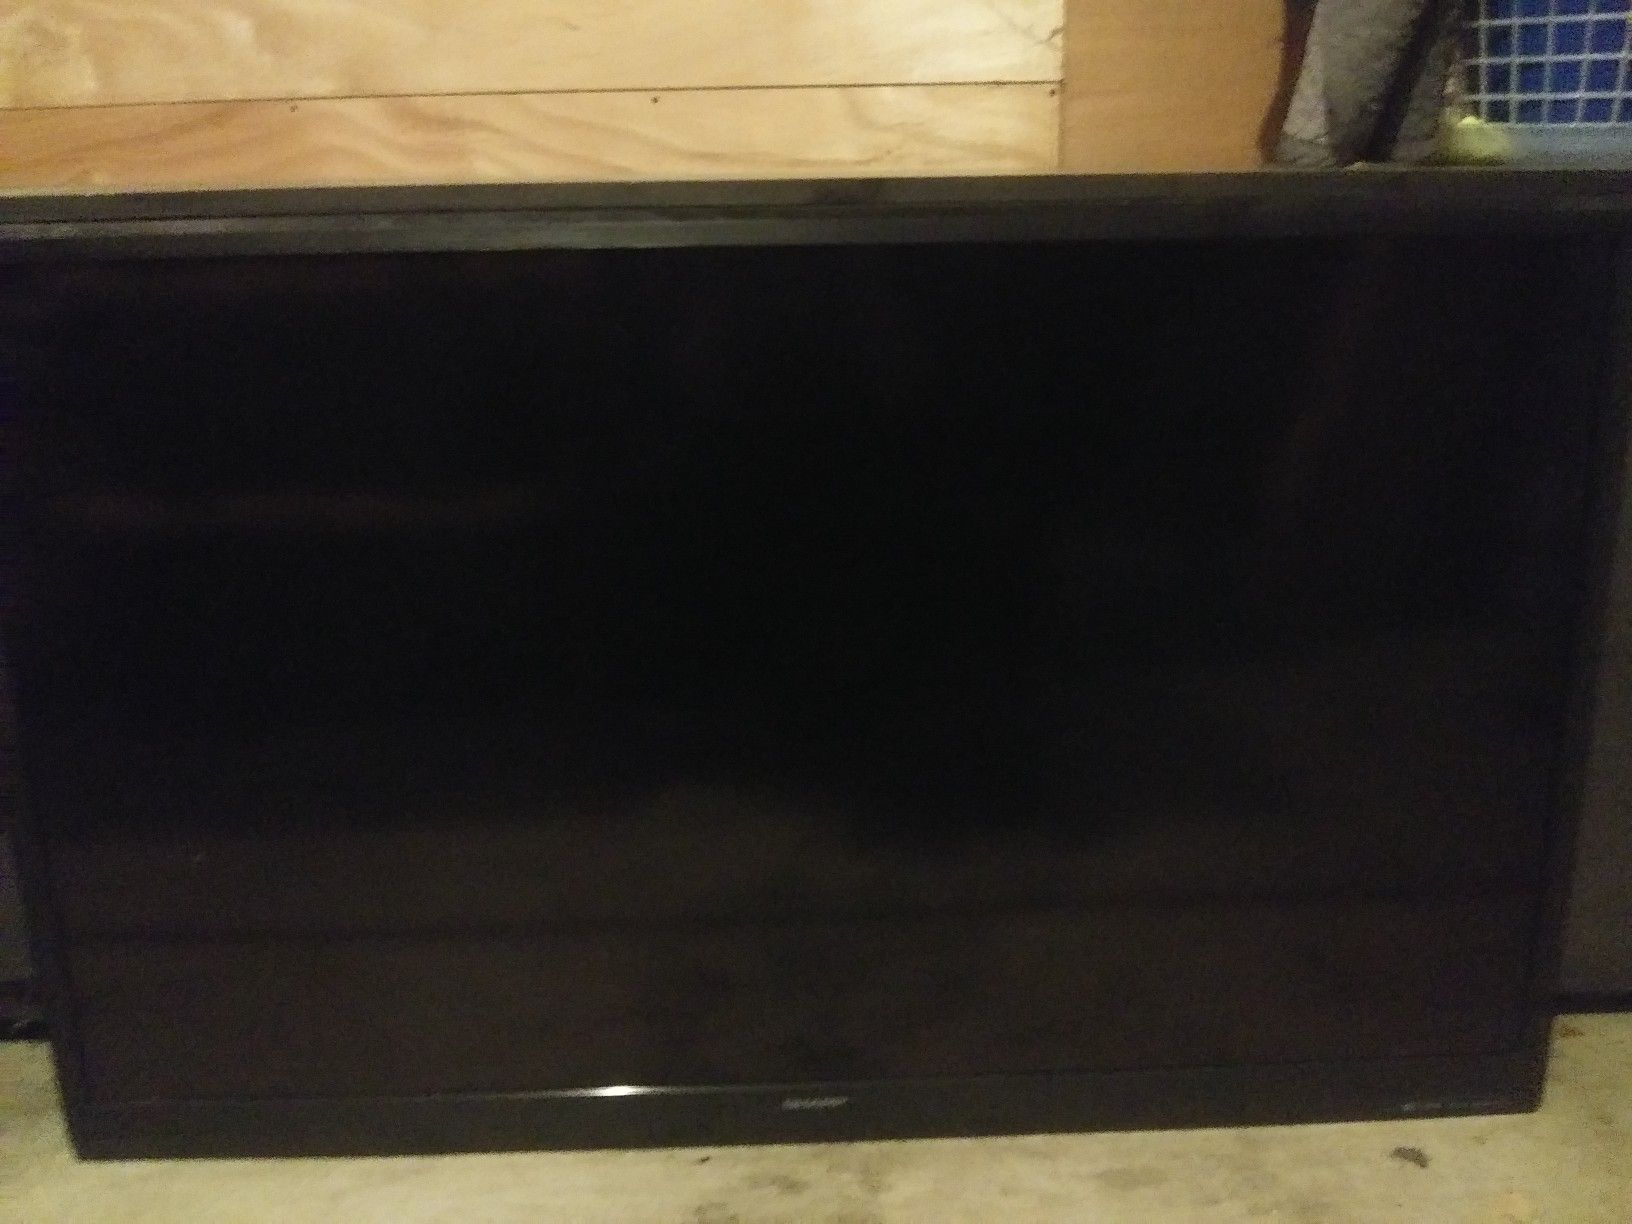 55 Flatscreen TV Aquos Sharp TV with very strong Wall mount